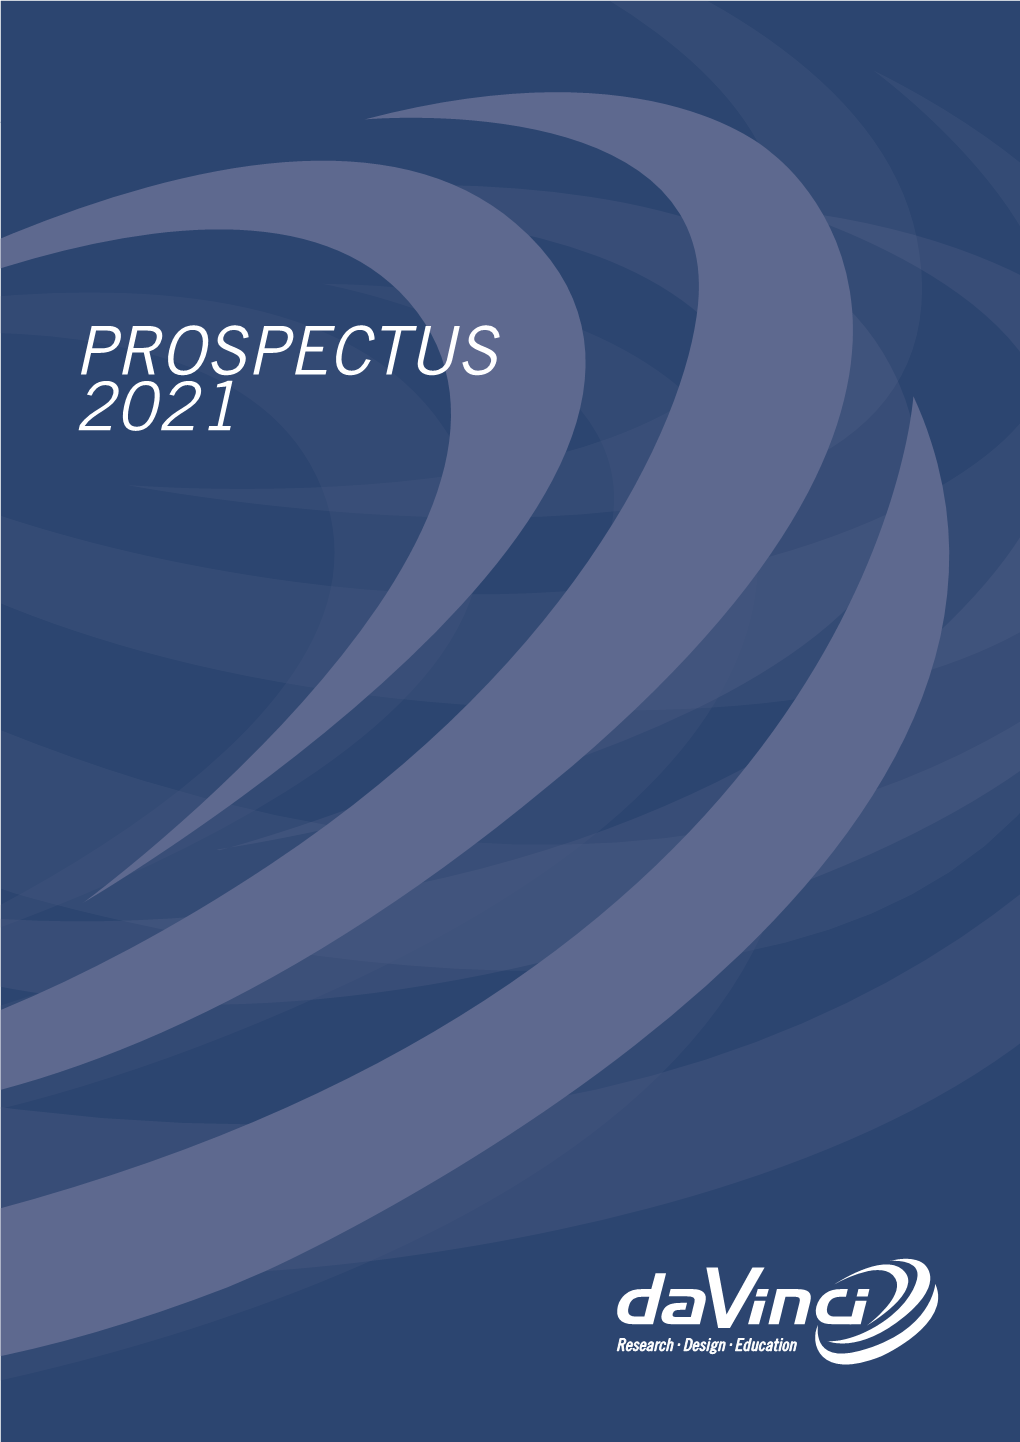 Prospectus 2021 Contents